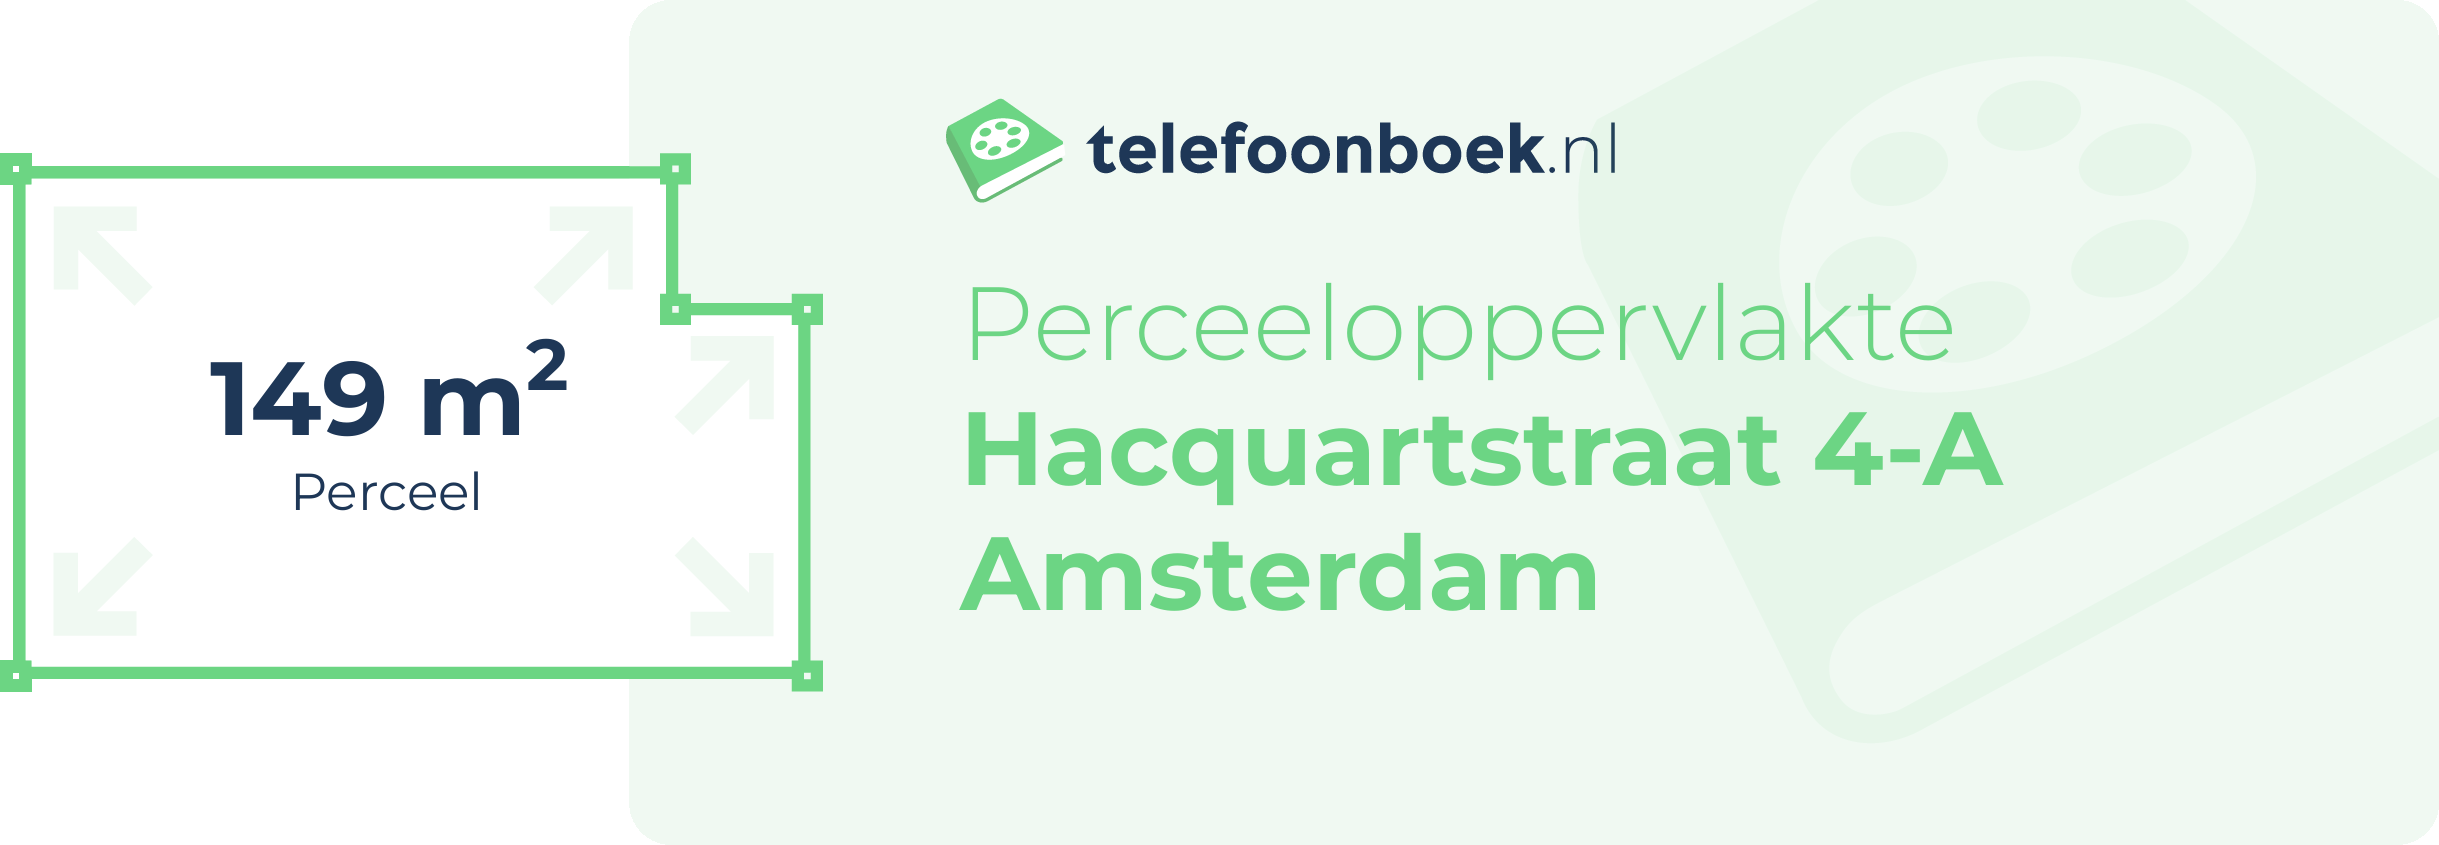 Perceeloppervlakte Hacquartstraat 4-A Amsterdam